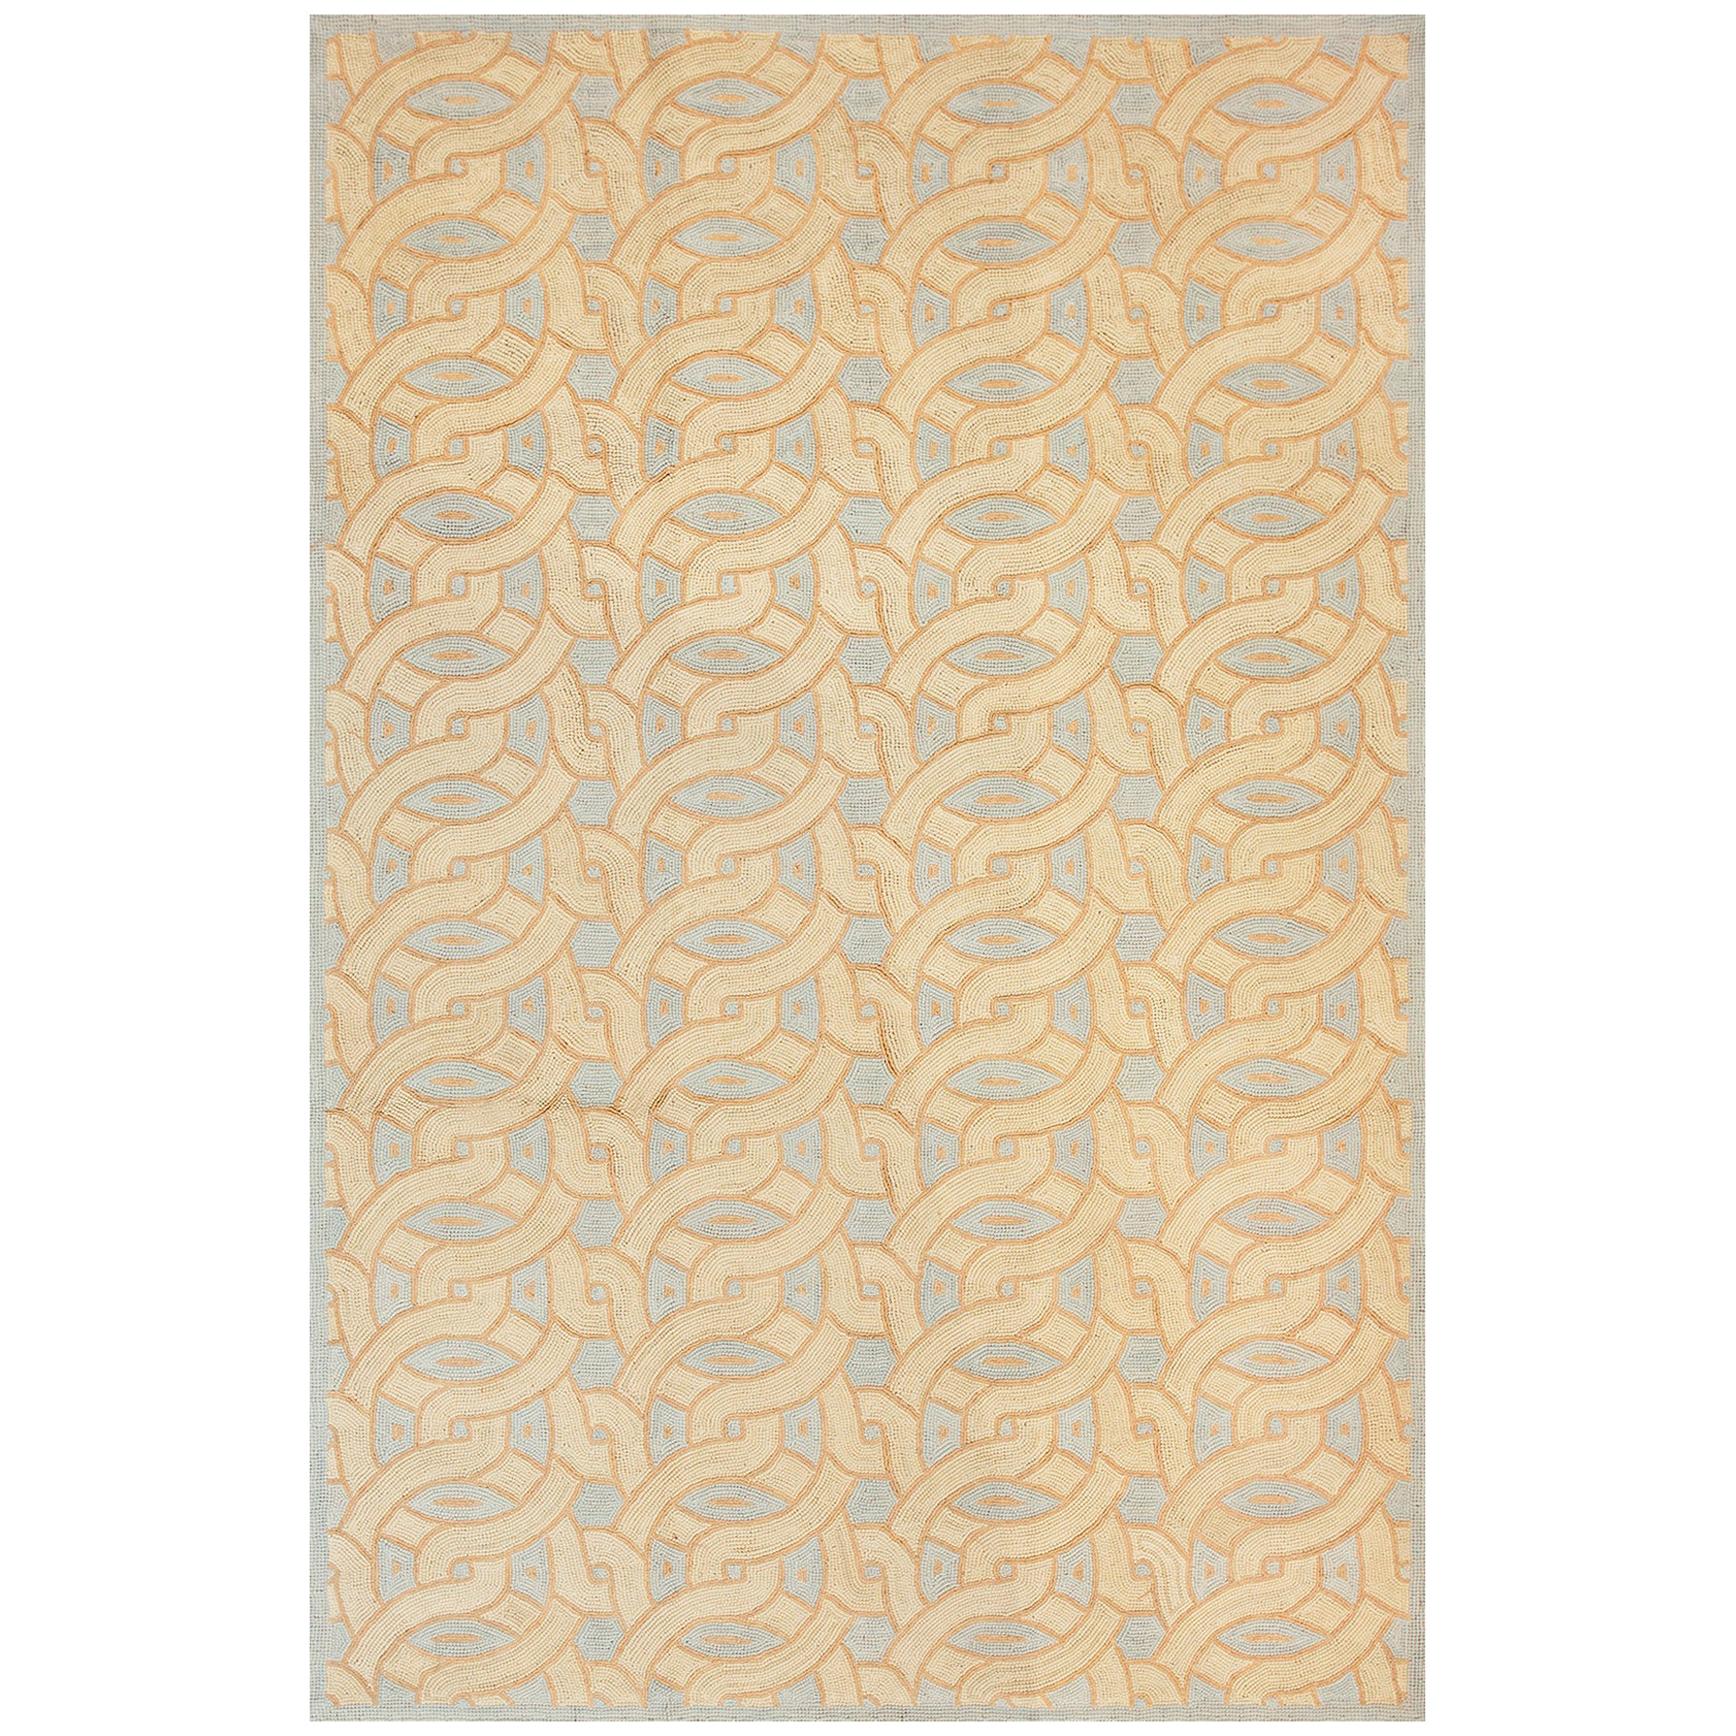 Contemporary Handmade Cotton Hooked Rug ( 6' x 9' - 183 x 275 cm )